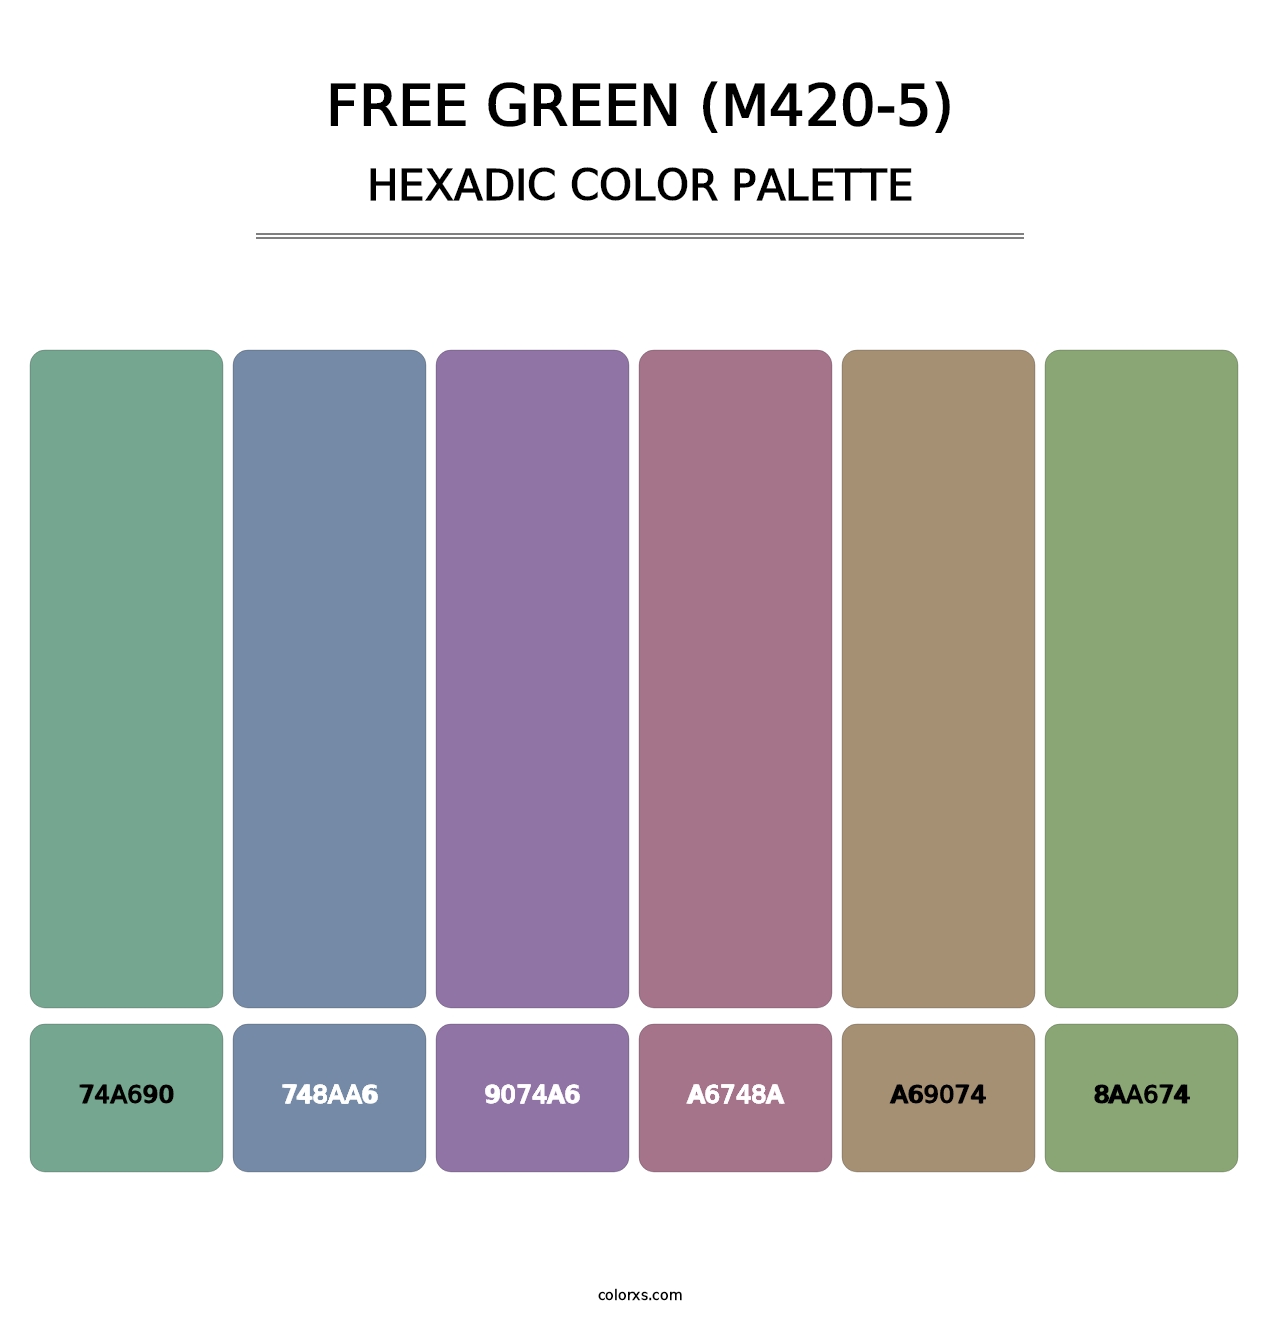 Free Green (M420-5) - Hexadic Color Palette